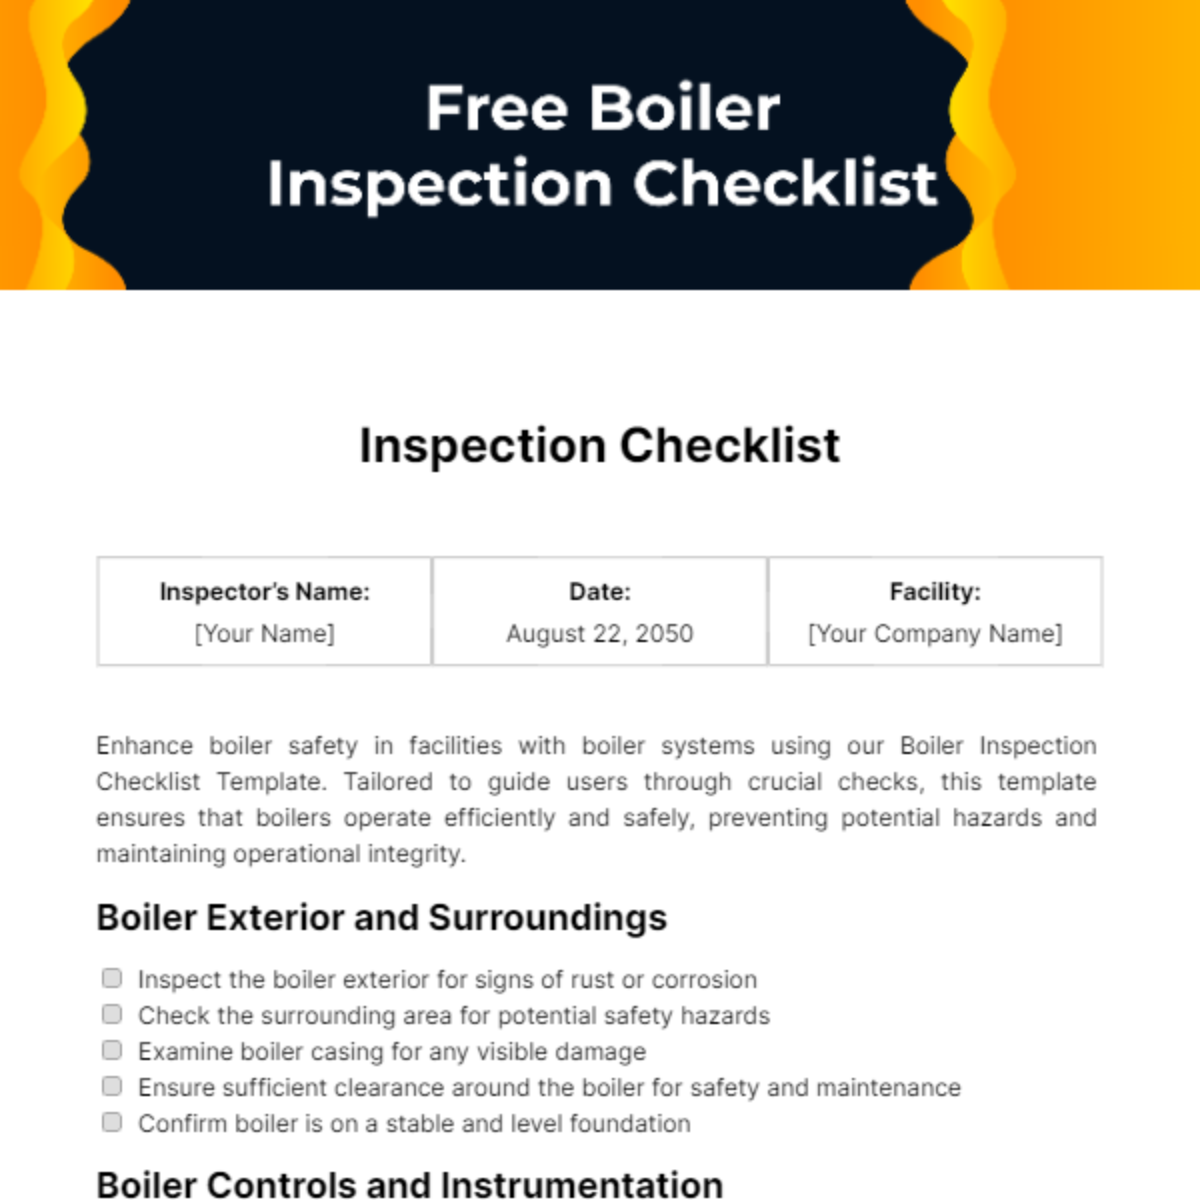 Free Boiler Inspection Checklist Template